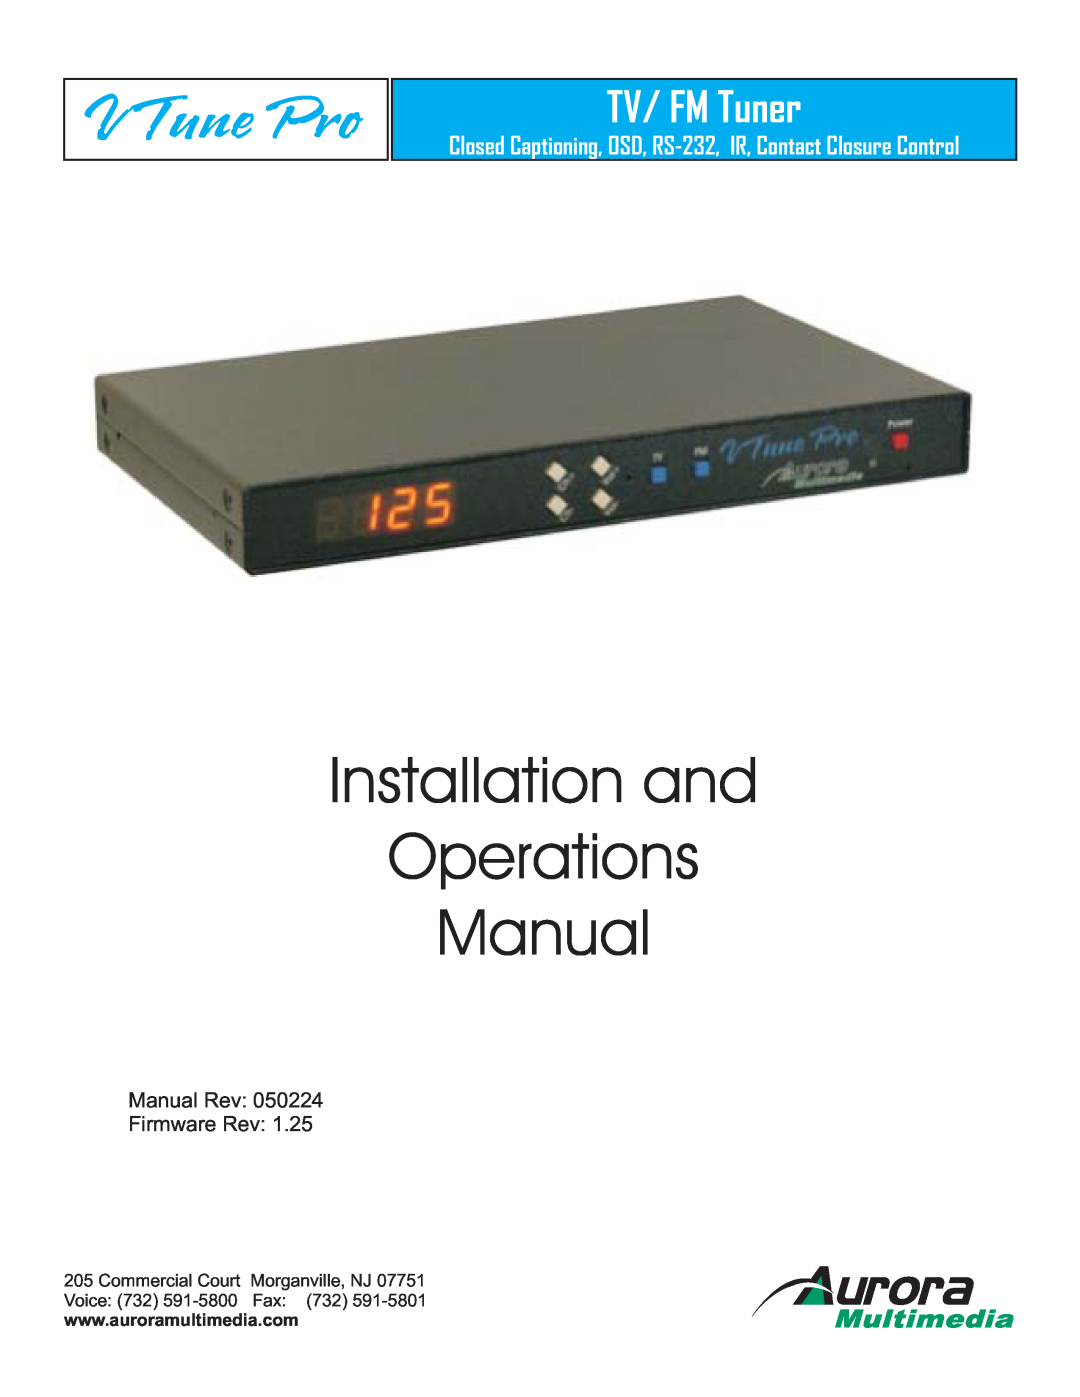 Aurora Multimedia TV/FM Tuner manual Installation and Operations Manual, V Tune Pro, TV/ FM Tuner 